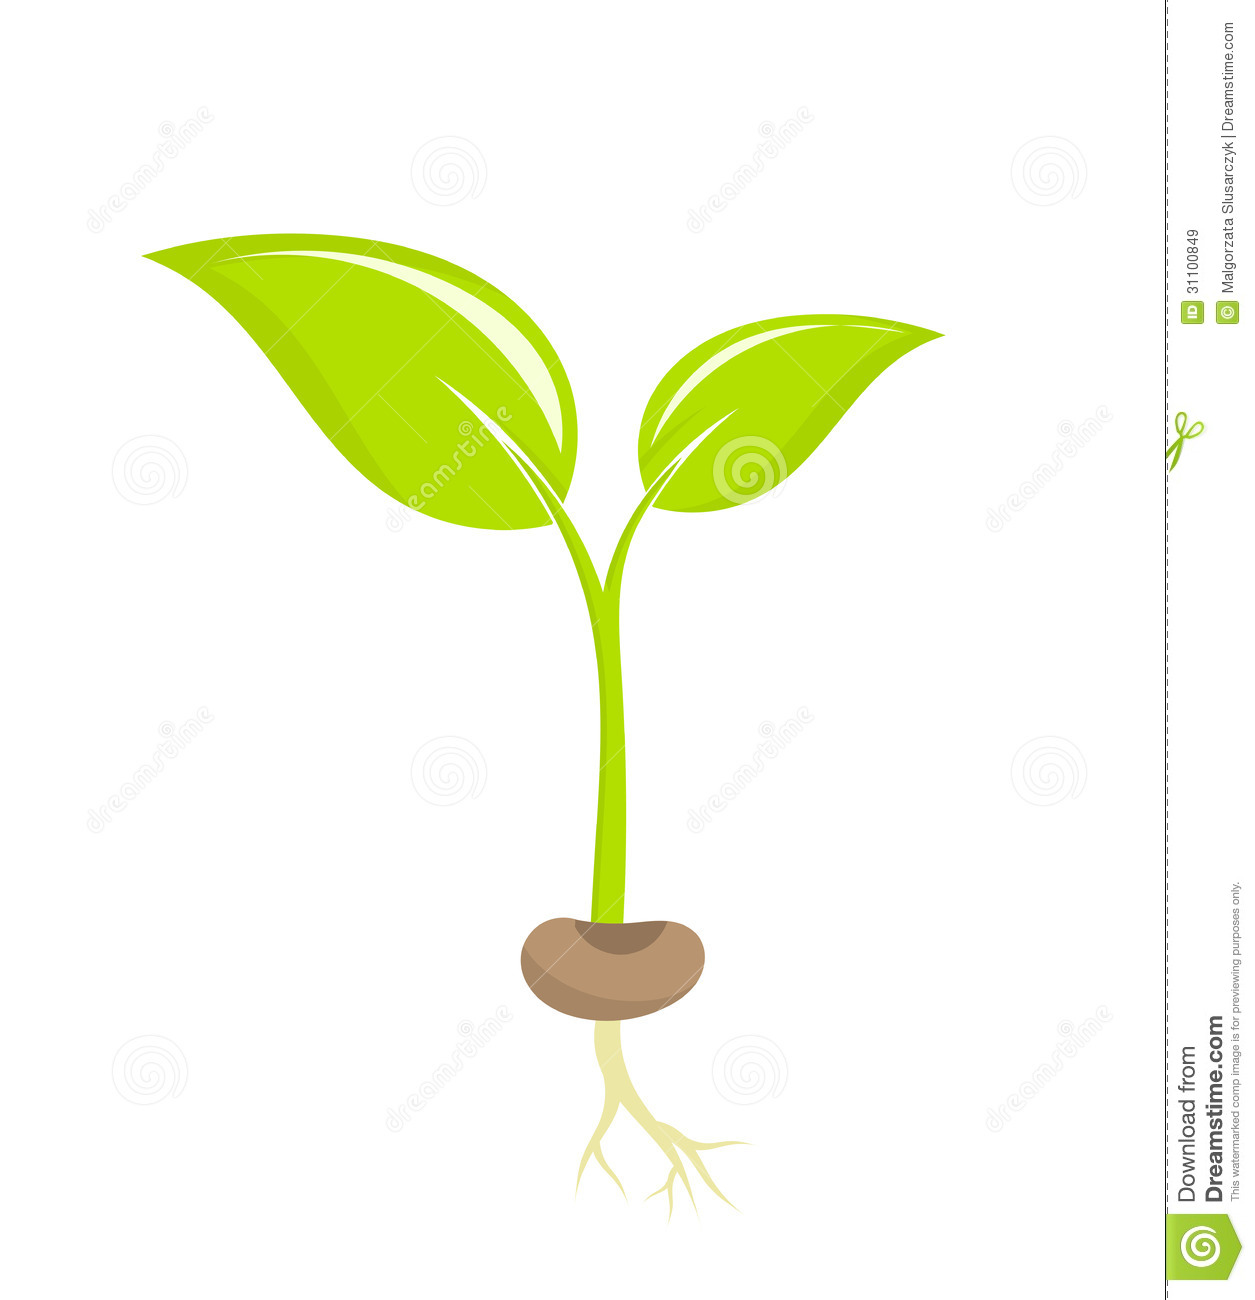 Plant Seedling Royalty Free Stock Images   Image  31100849